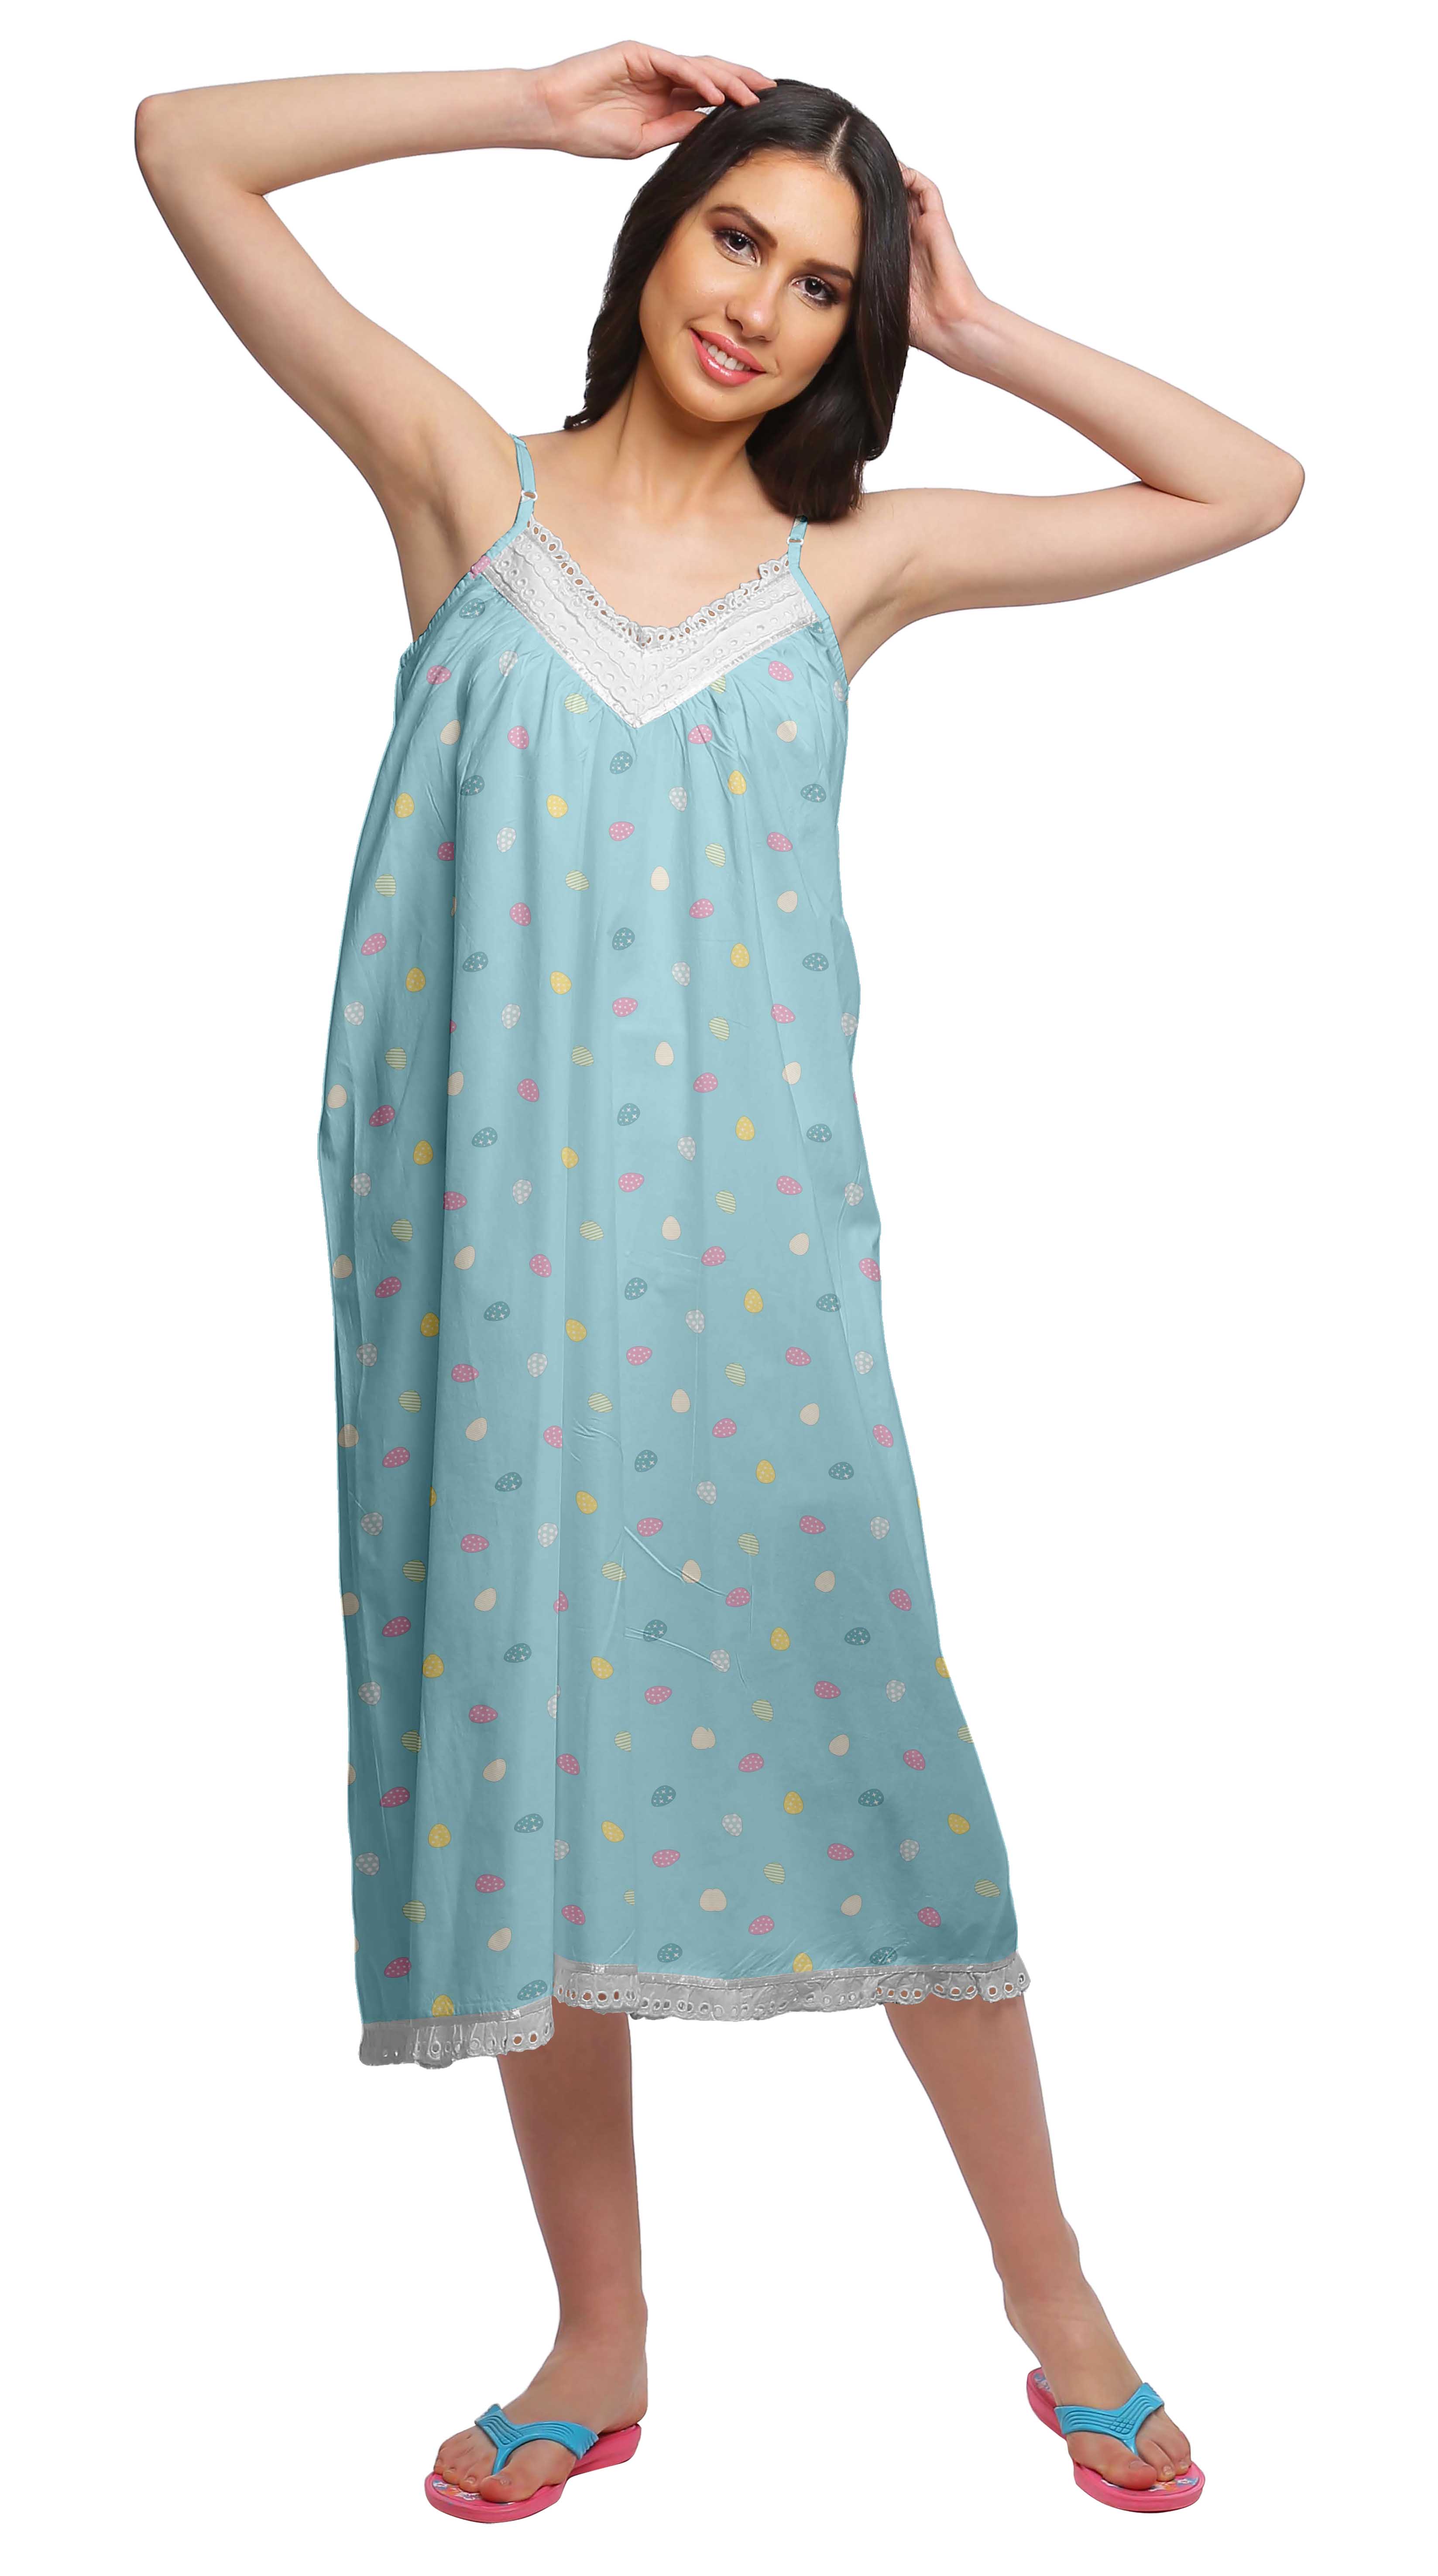 Moomaya Women's Printed Spaghetti Strap Nightdress Sleepwear Gown-BT-530F 